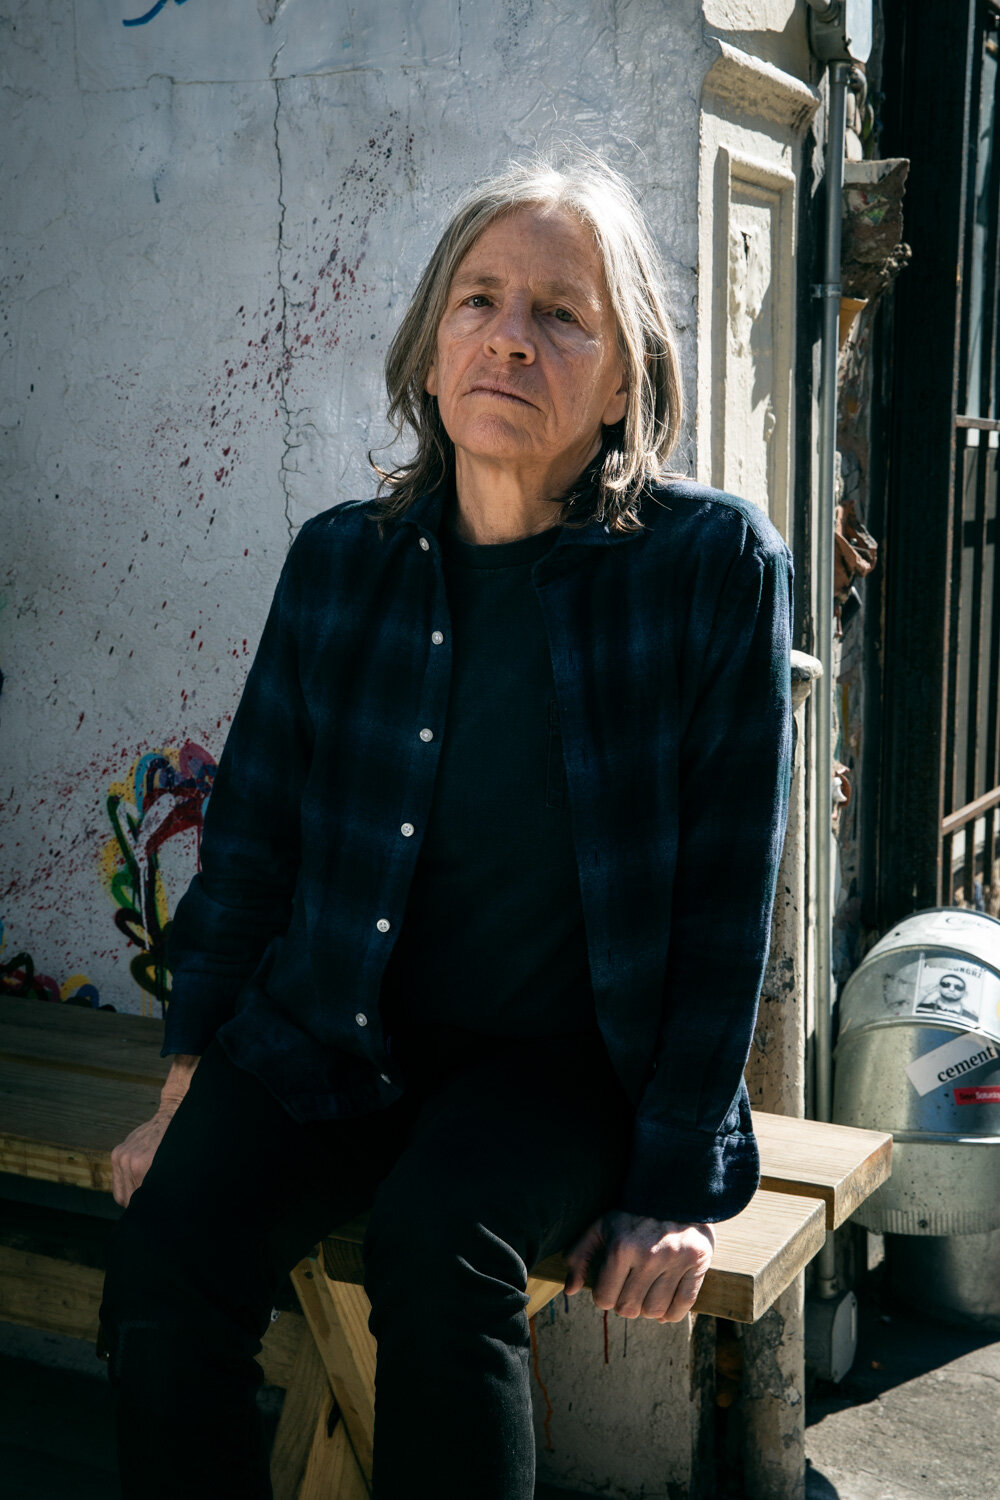  New York City 2019 03 11 Eileen Myles, writer and poet. Shot in New York on assignment for Dagens Nyheter. 